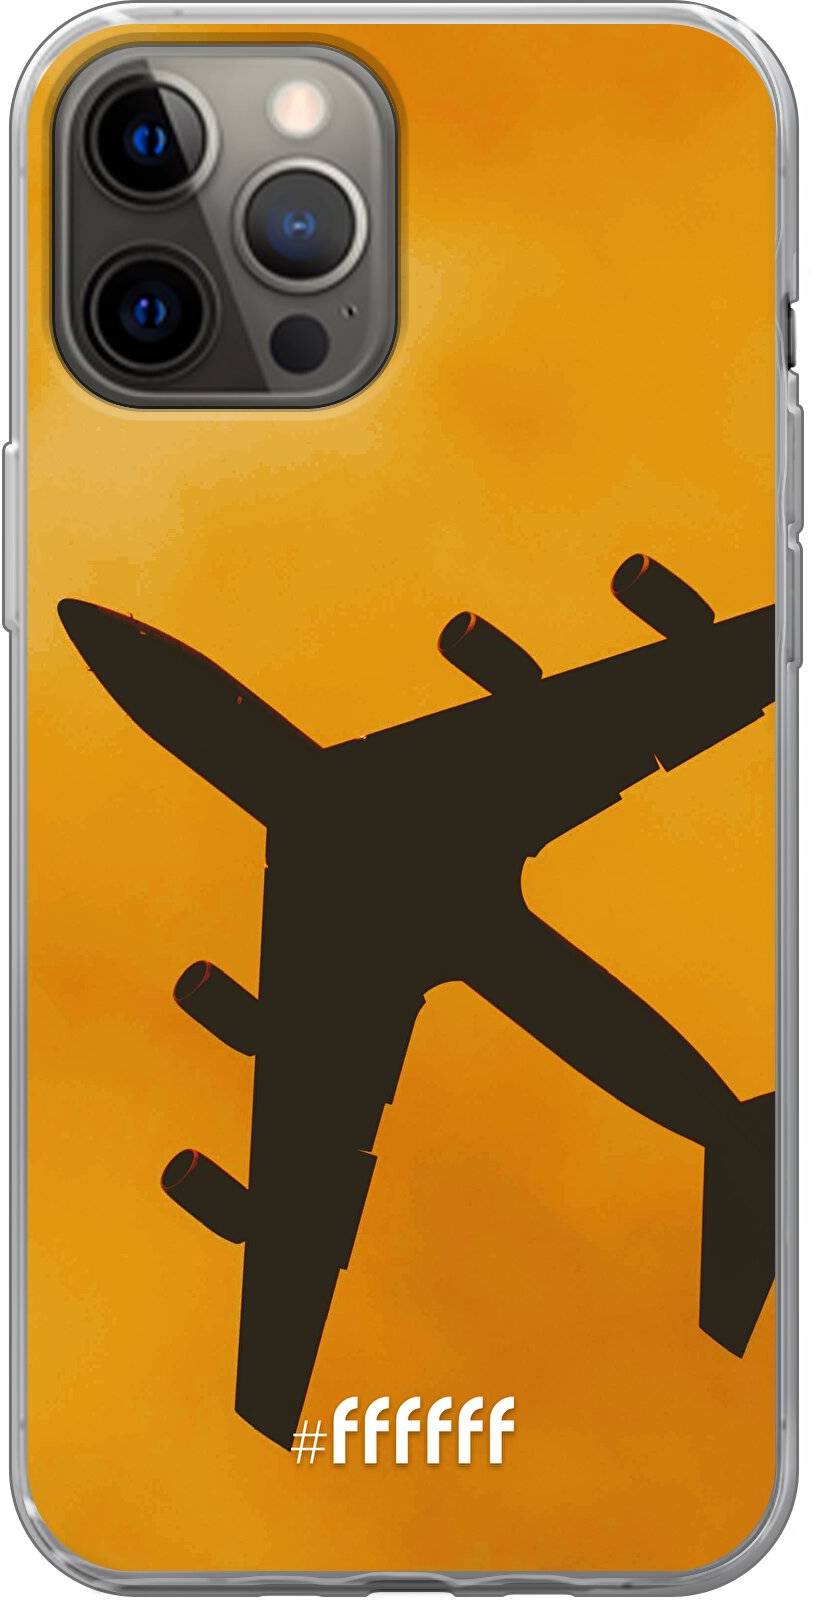 Aeroplane iPhone 12 Pro Max